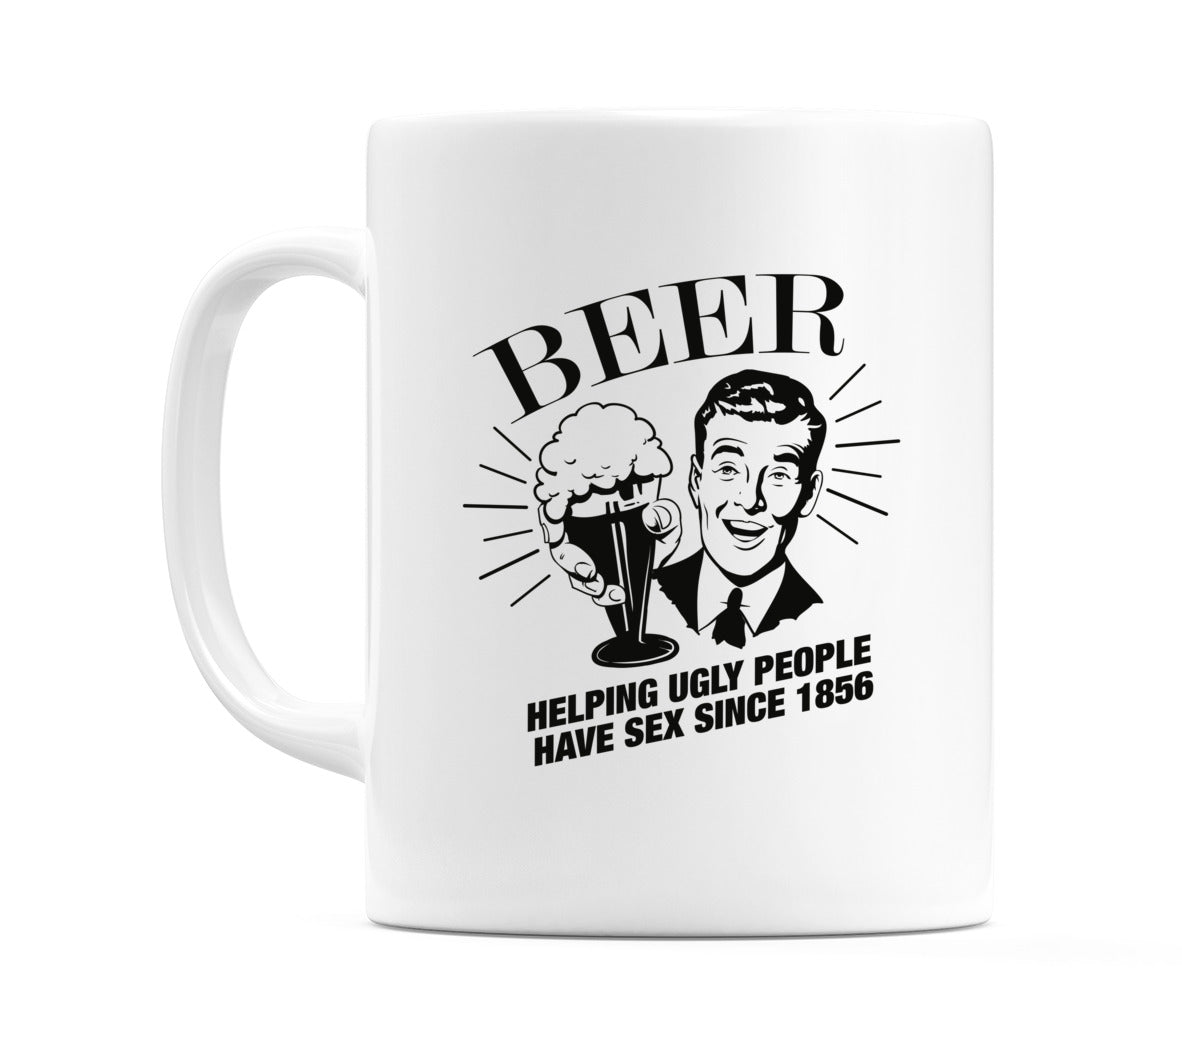 Beer... Helping Ugly People Have Sex Since 1856 Mug